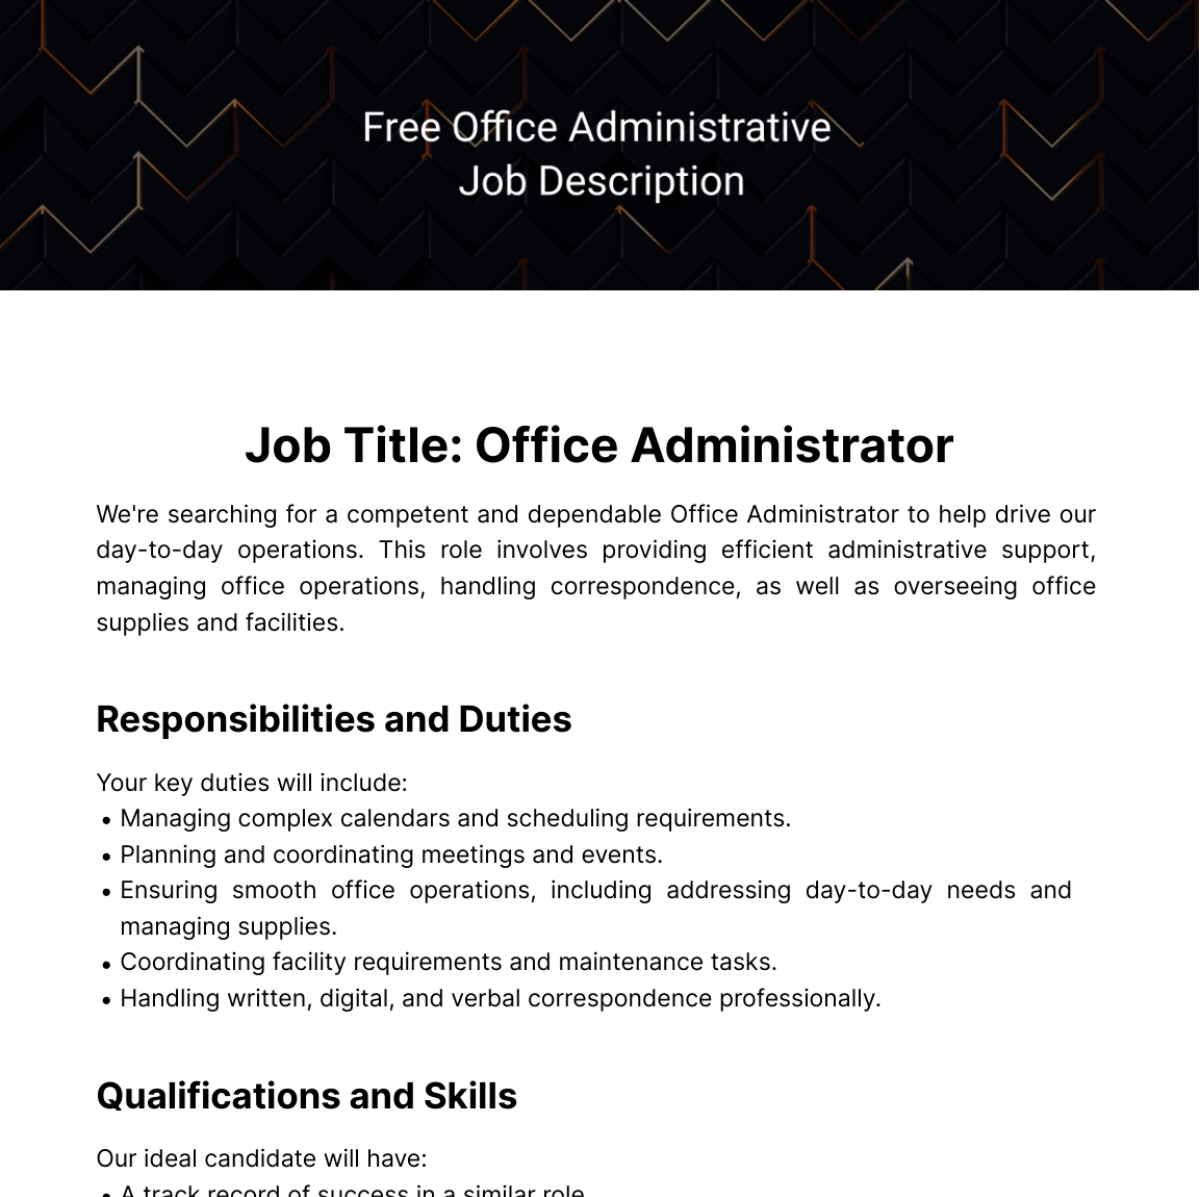 Free Office Administrative Job Description Template